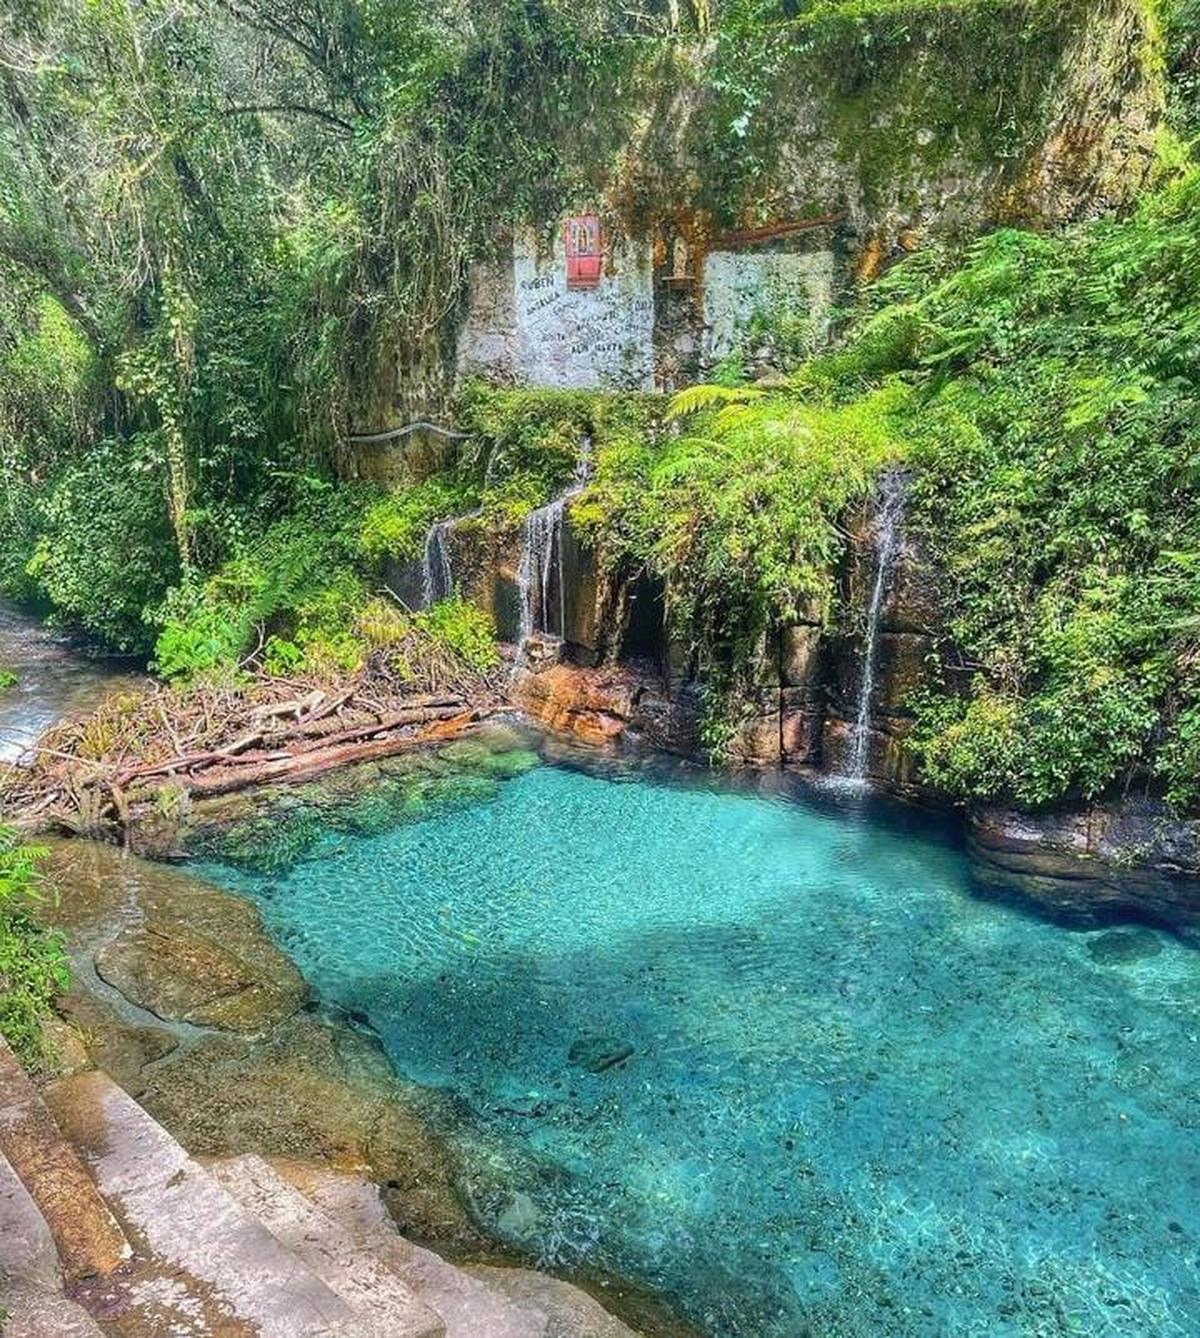 Reserva natural Pancho Poza | El paraíso escondido de Veracruz, Pancho Poza (Rofeer_/Instagram).